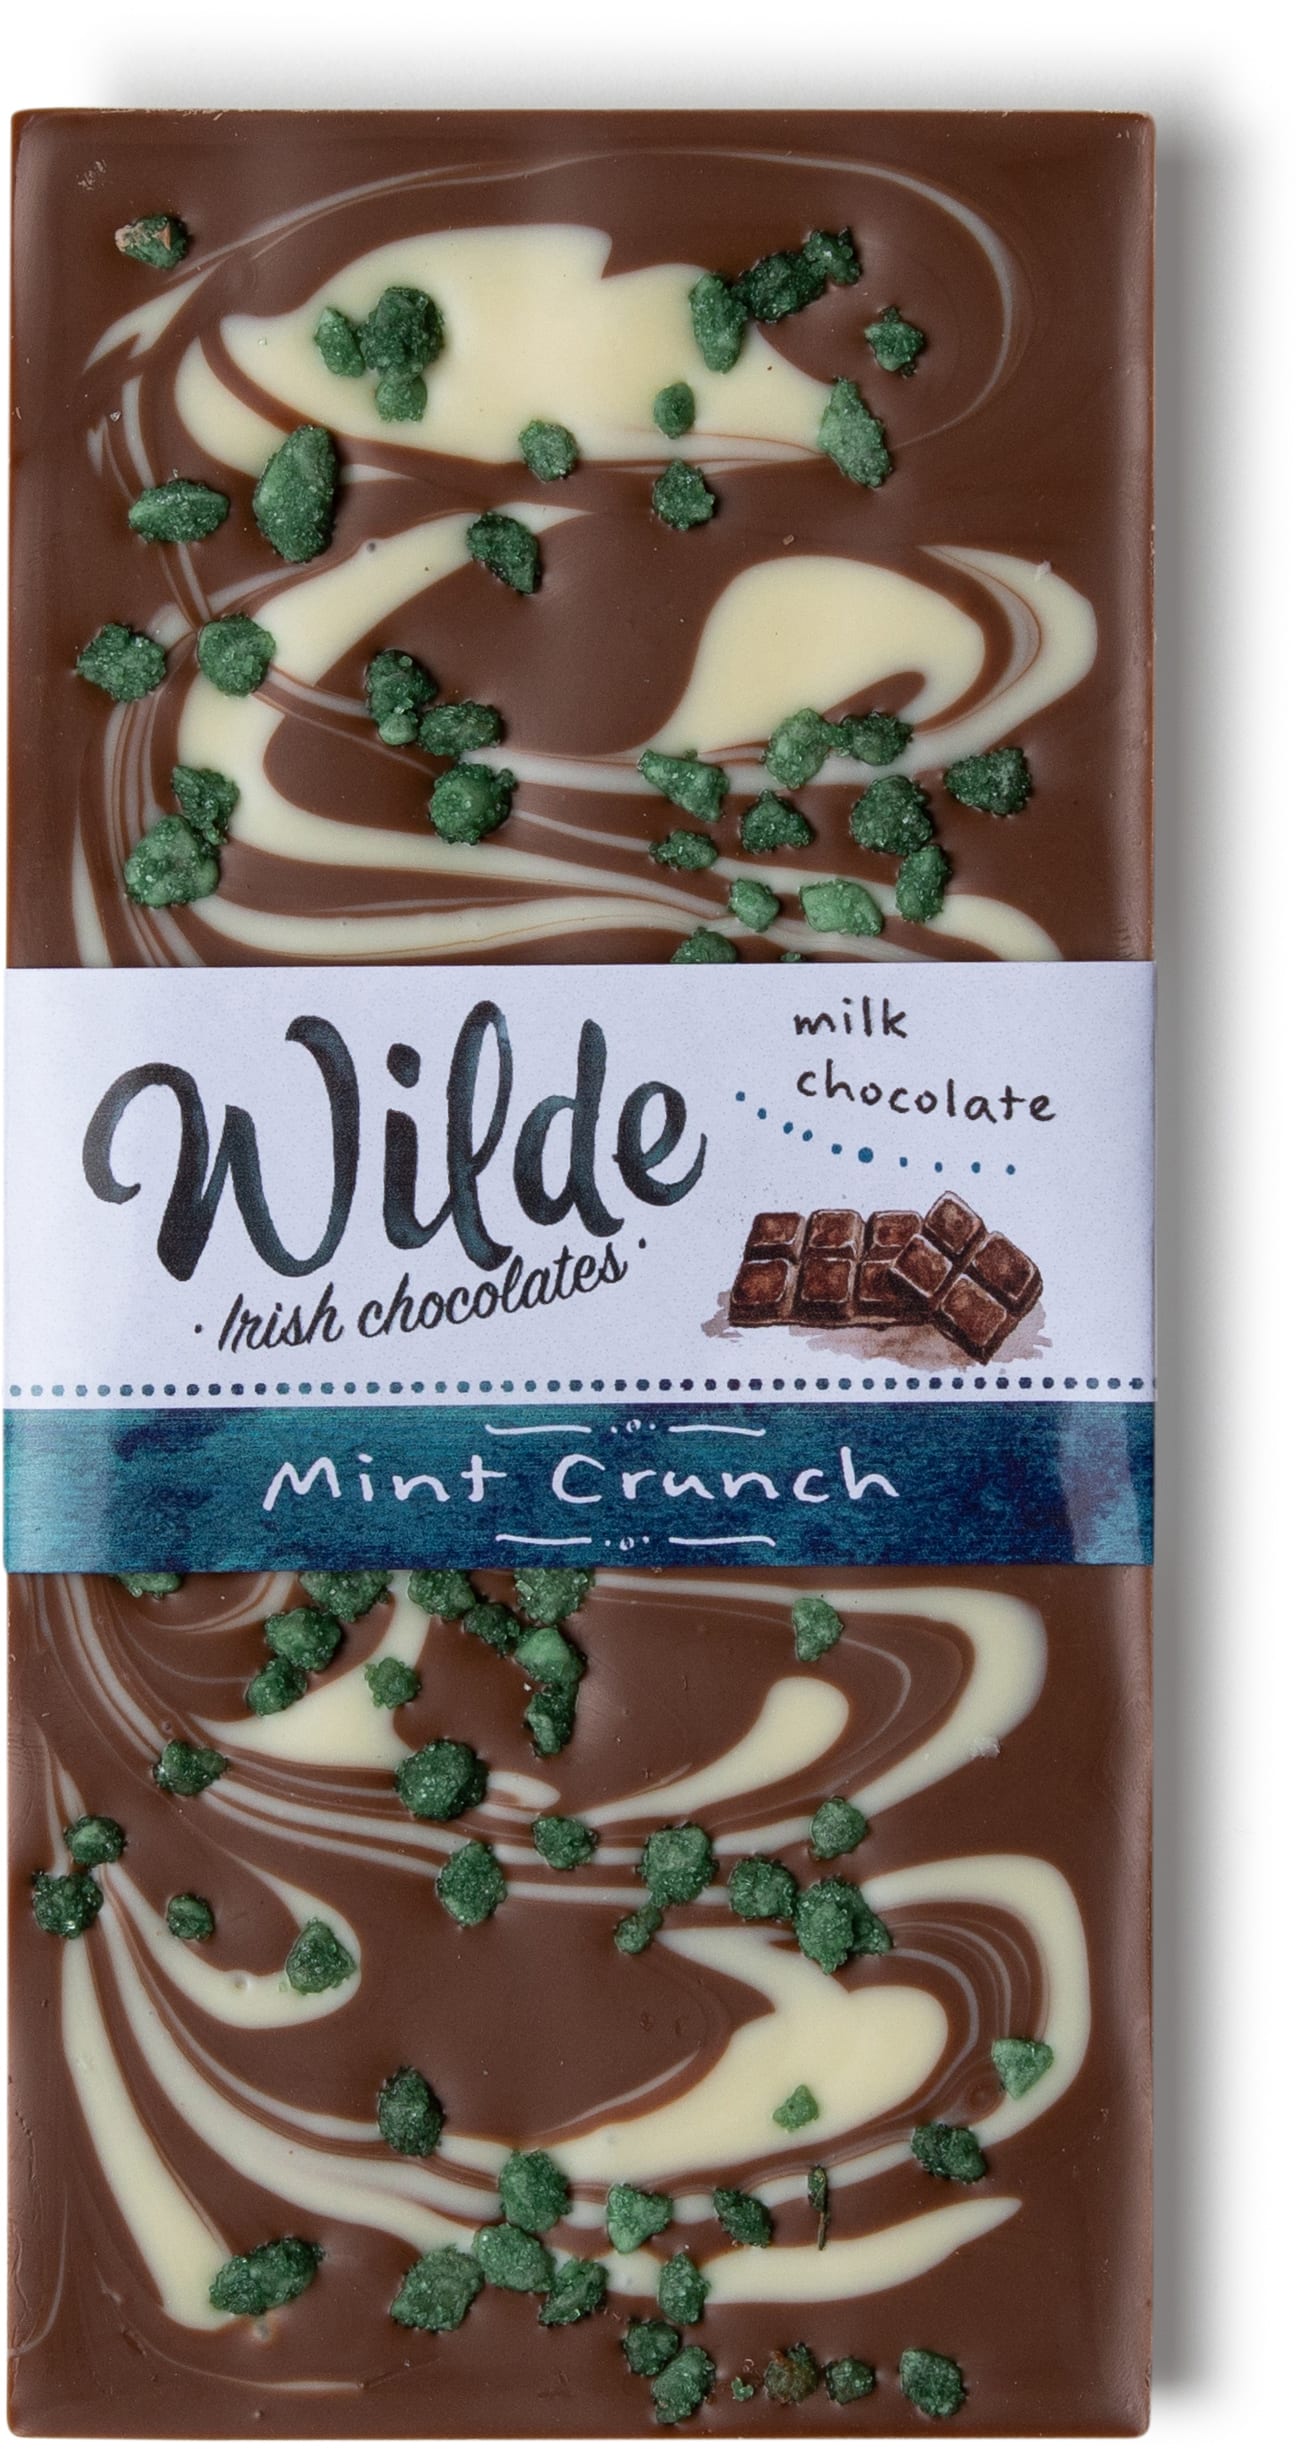 mint crunch chocolate bar - Wilde Irish Chocolates